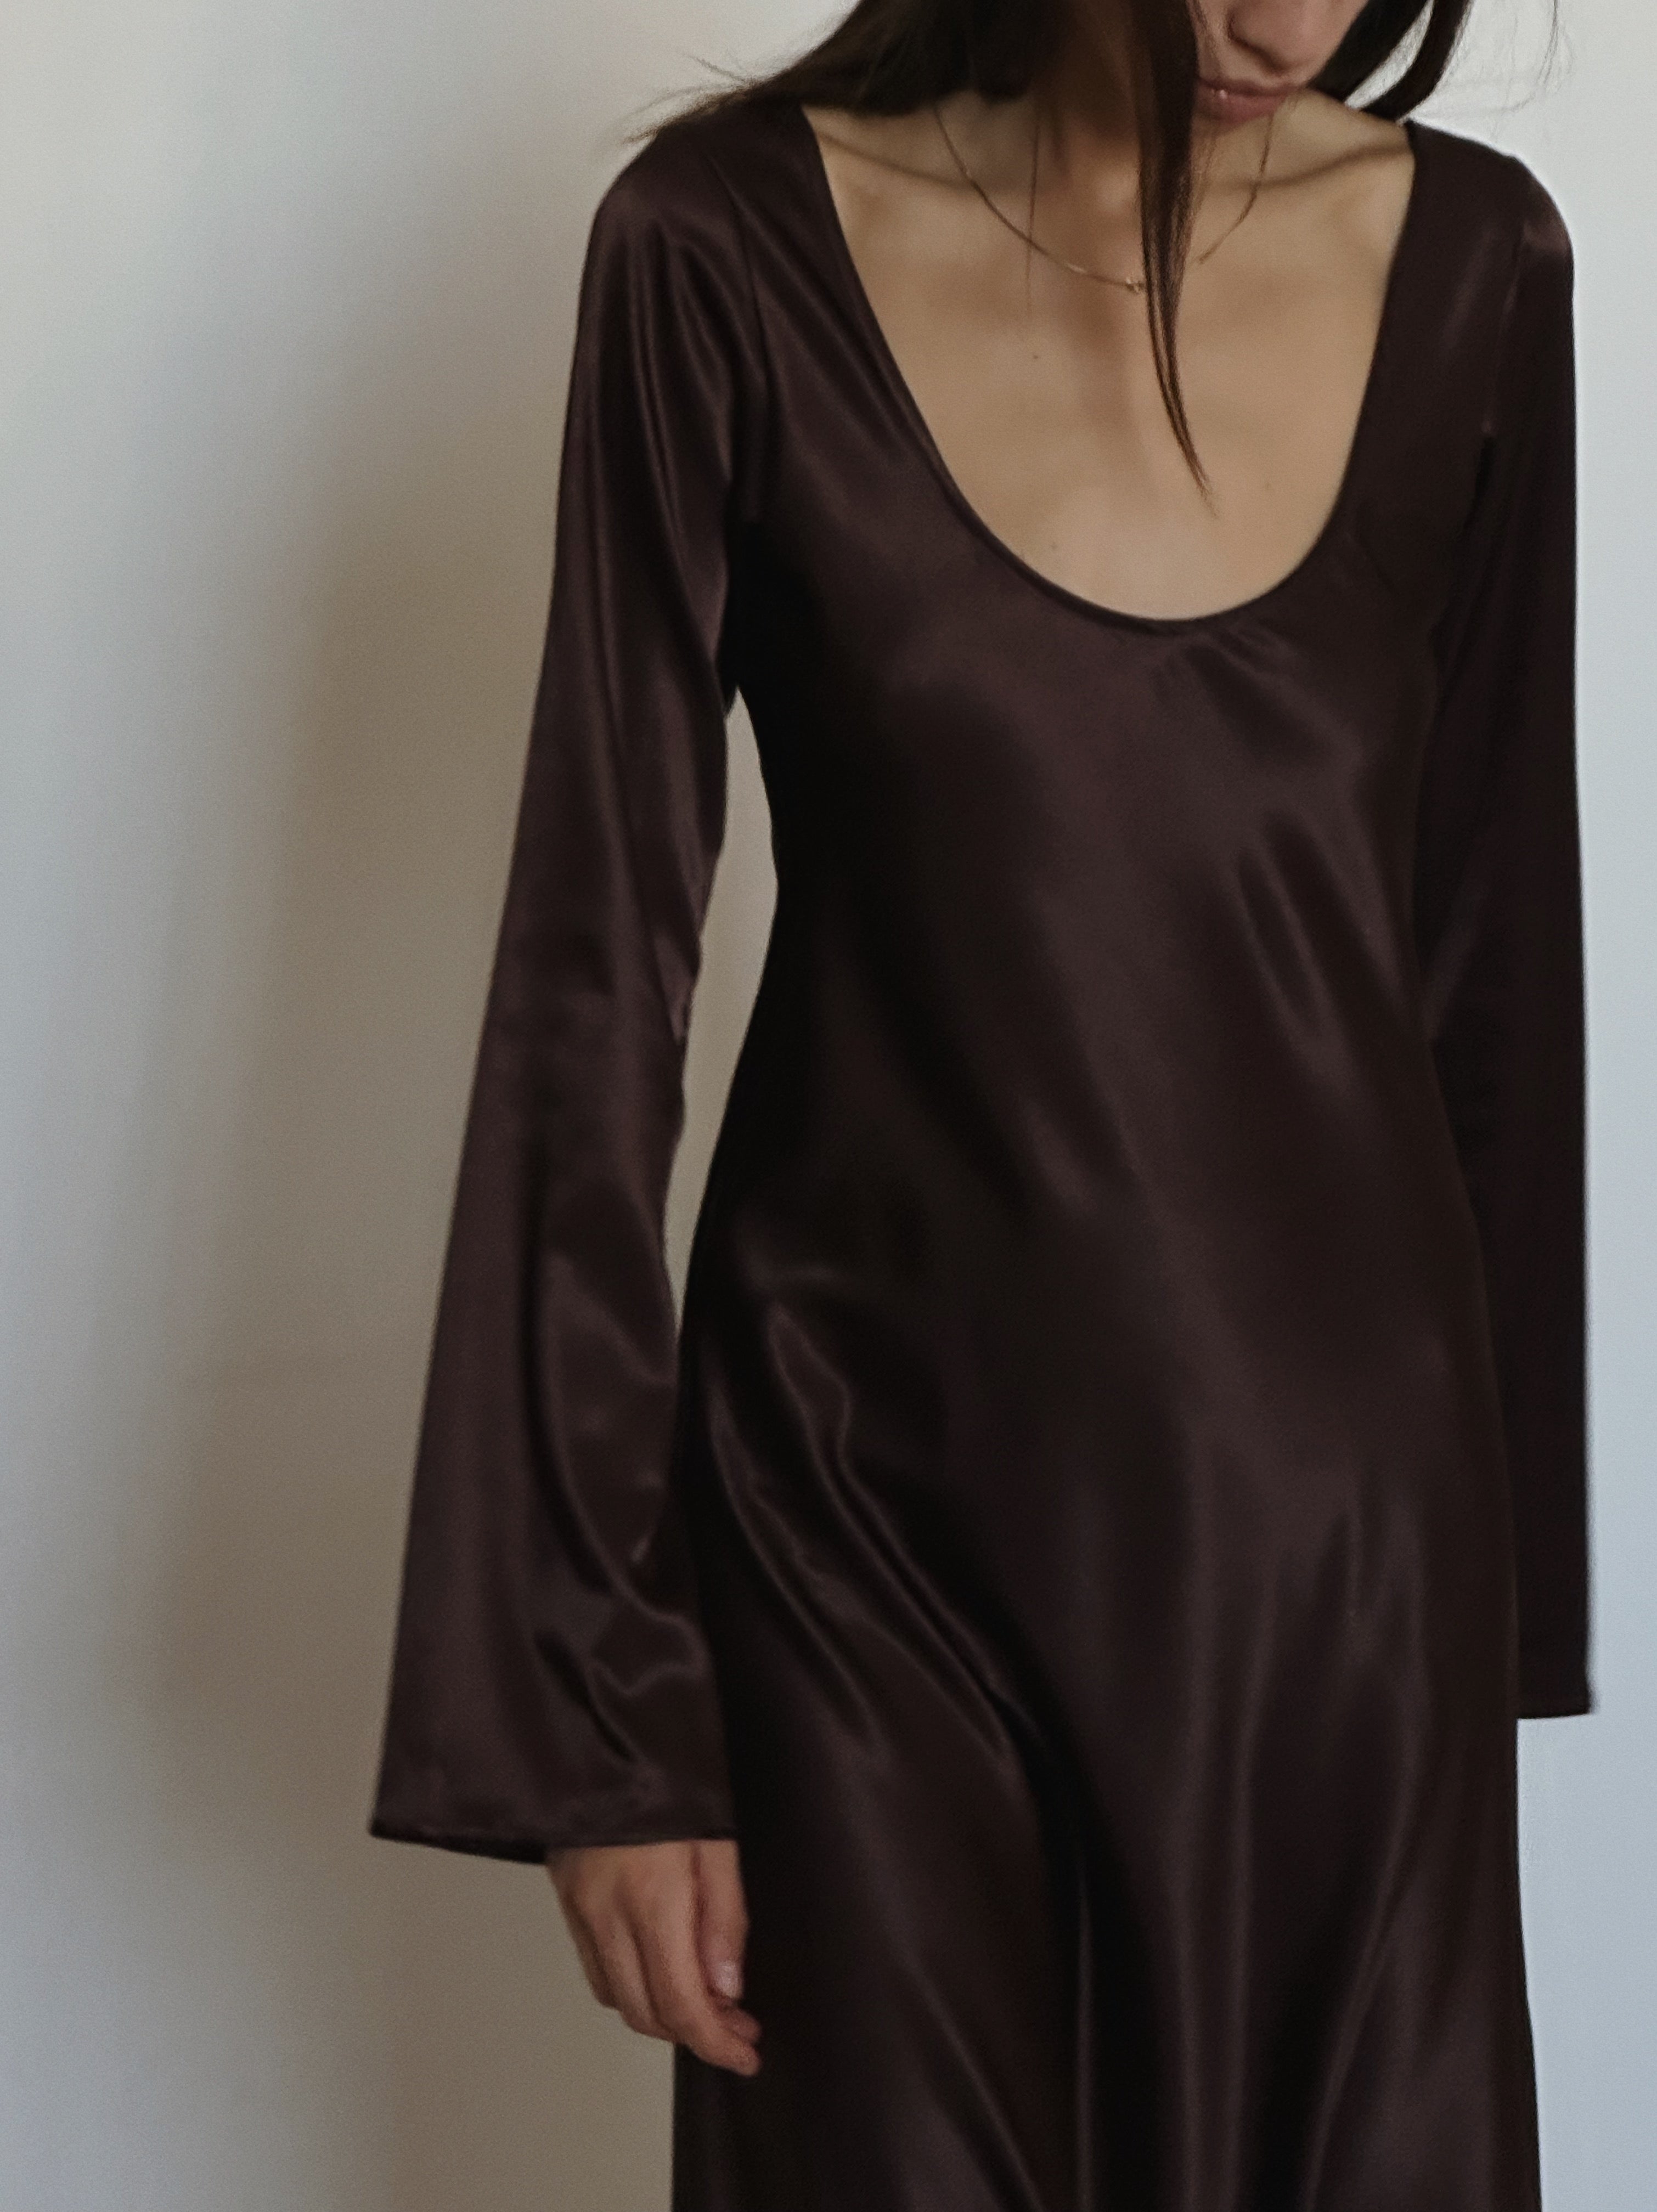 Trois Lover Chocolate Satin Long Sleeve Maxi Dress